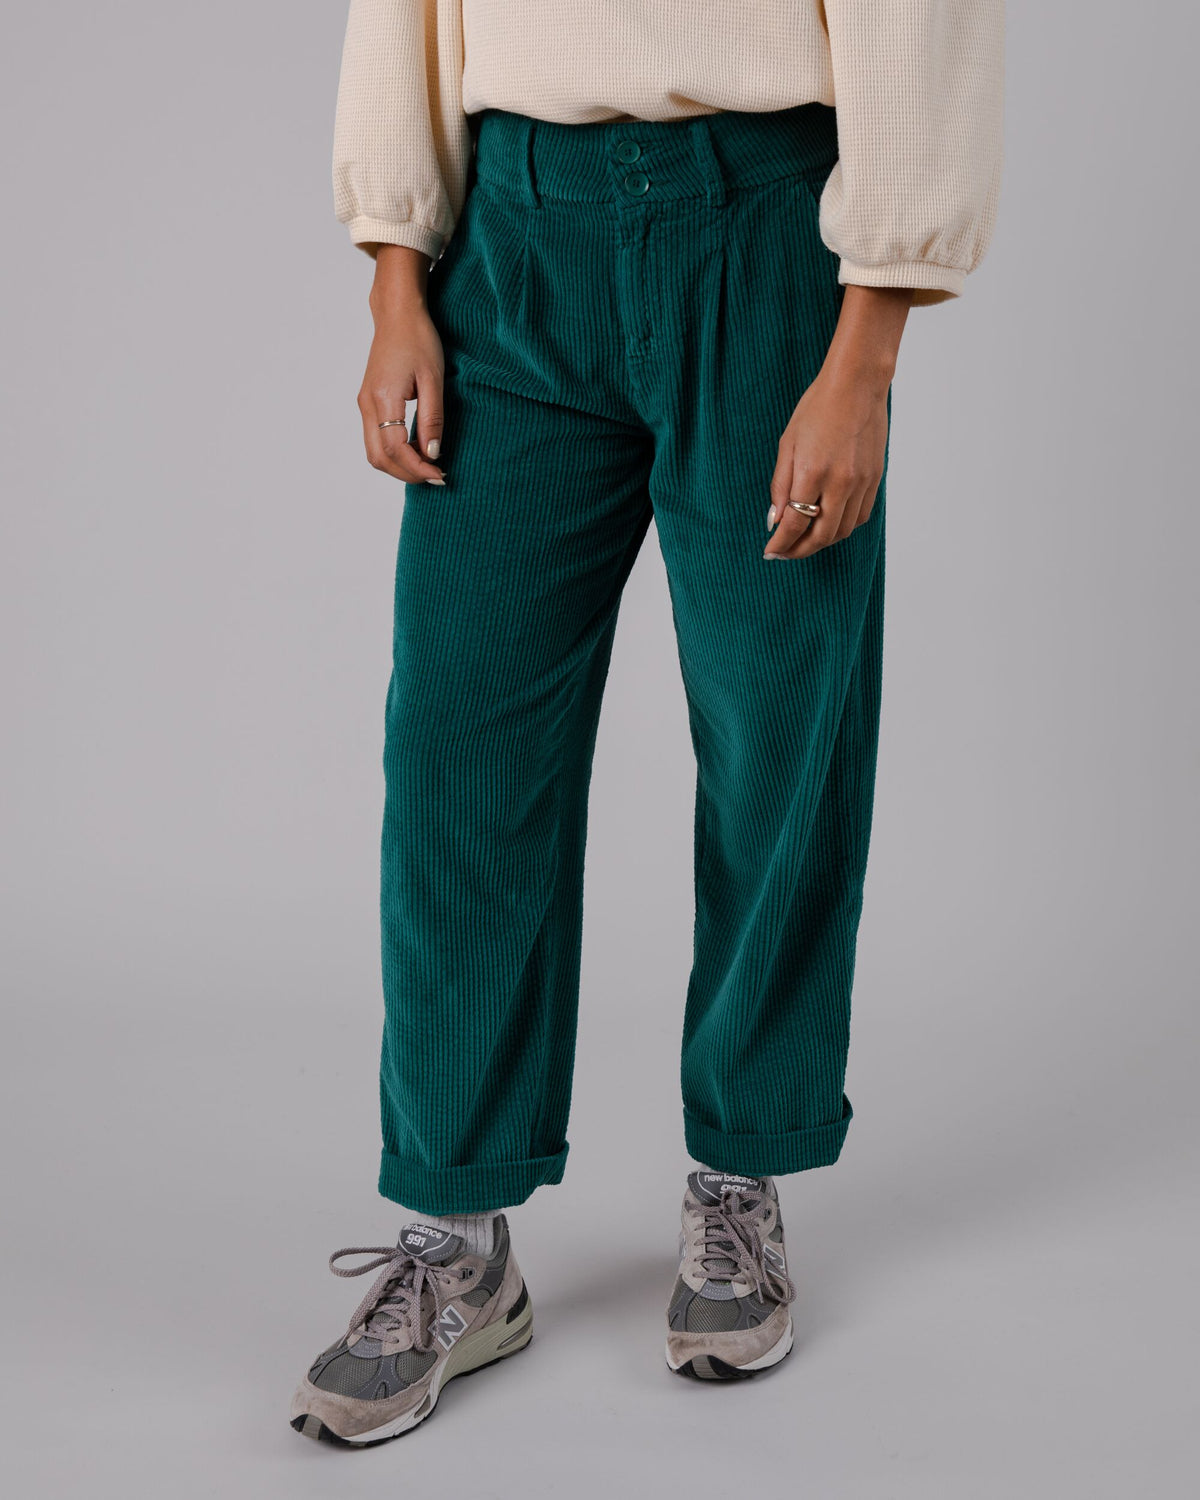 The Green High Waisted Corduroy Pants - Women's Corduroy High Waist Pants,  Straight, Cotton - Green - Bottoms | RIHOAS